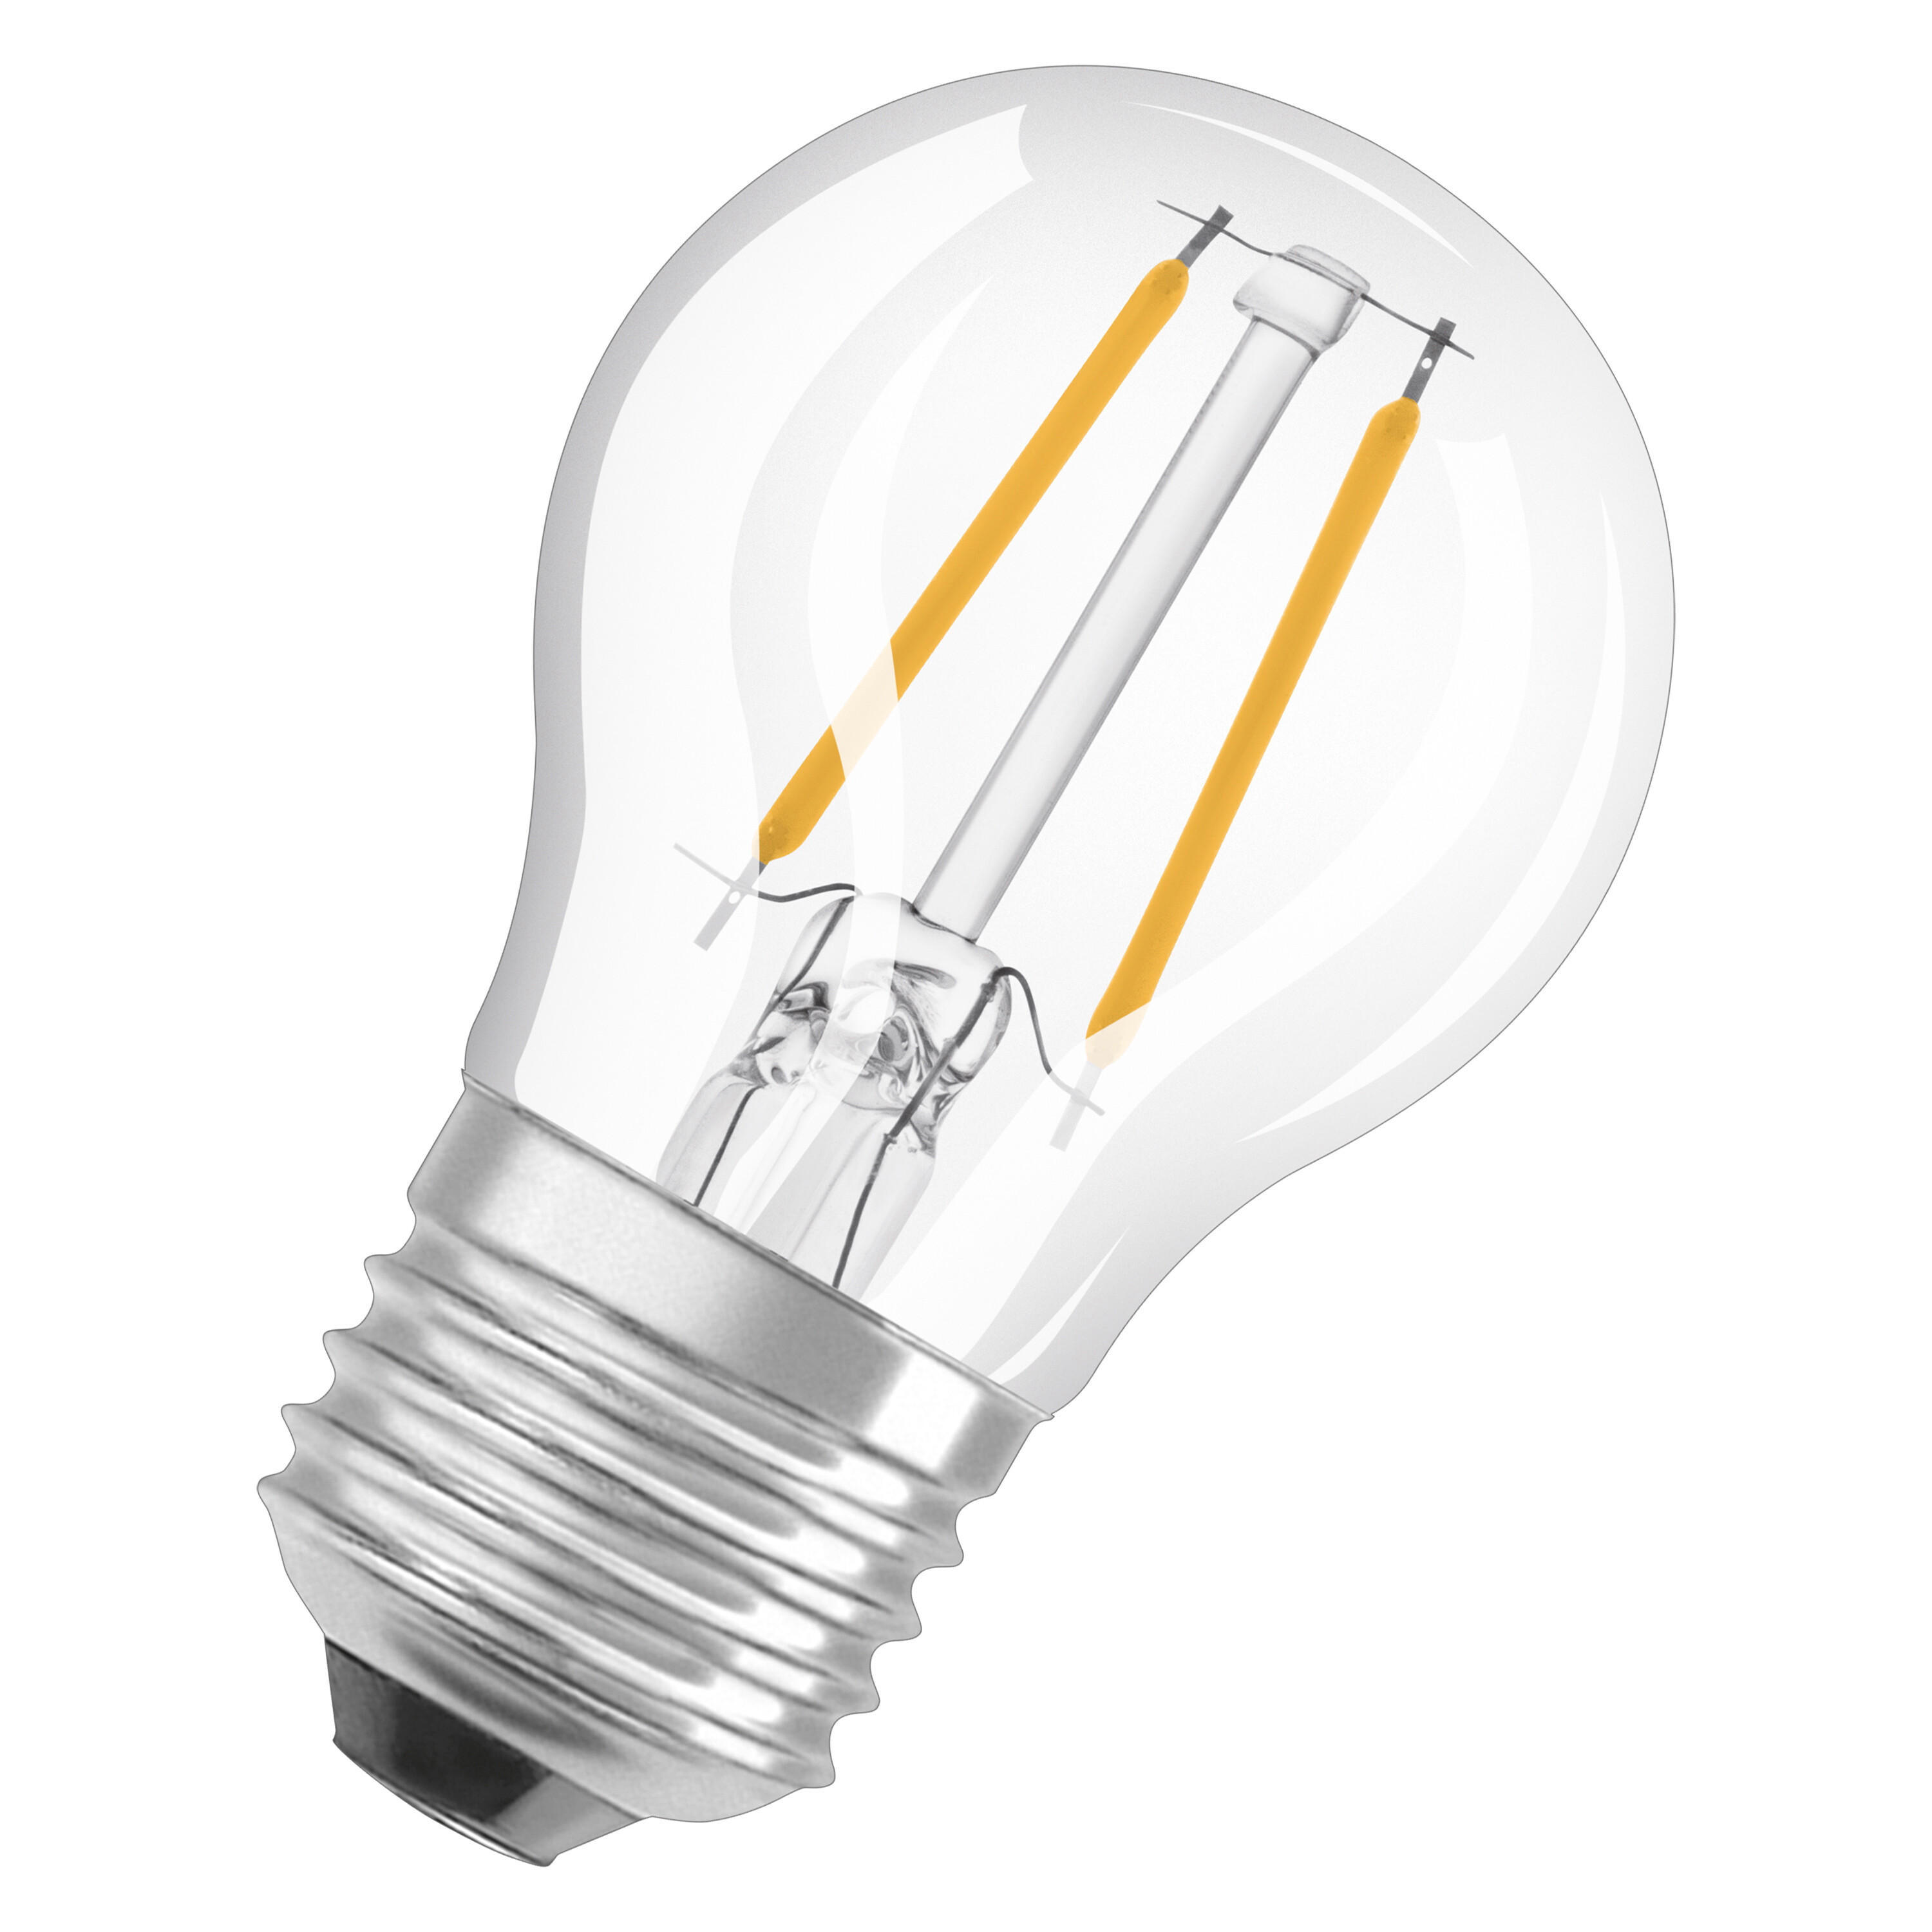 OSRAM  LED P LED CLASSIC PLUS Lumen Lampe Warmweiß SUPERSTAR 470 FILAMENT